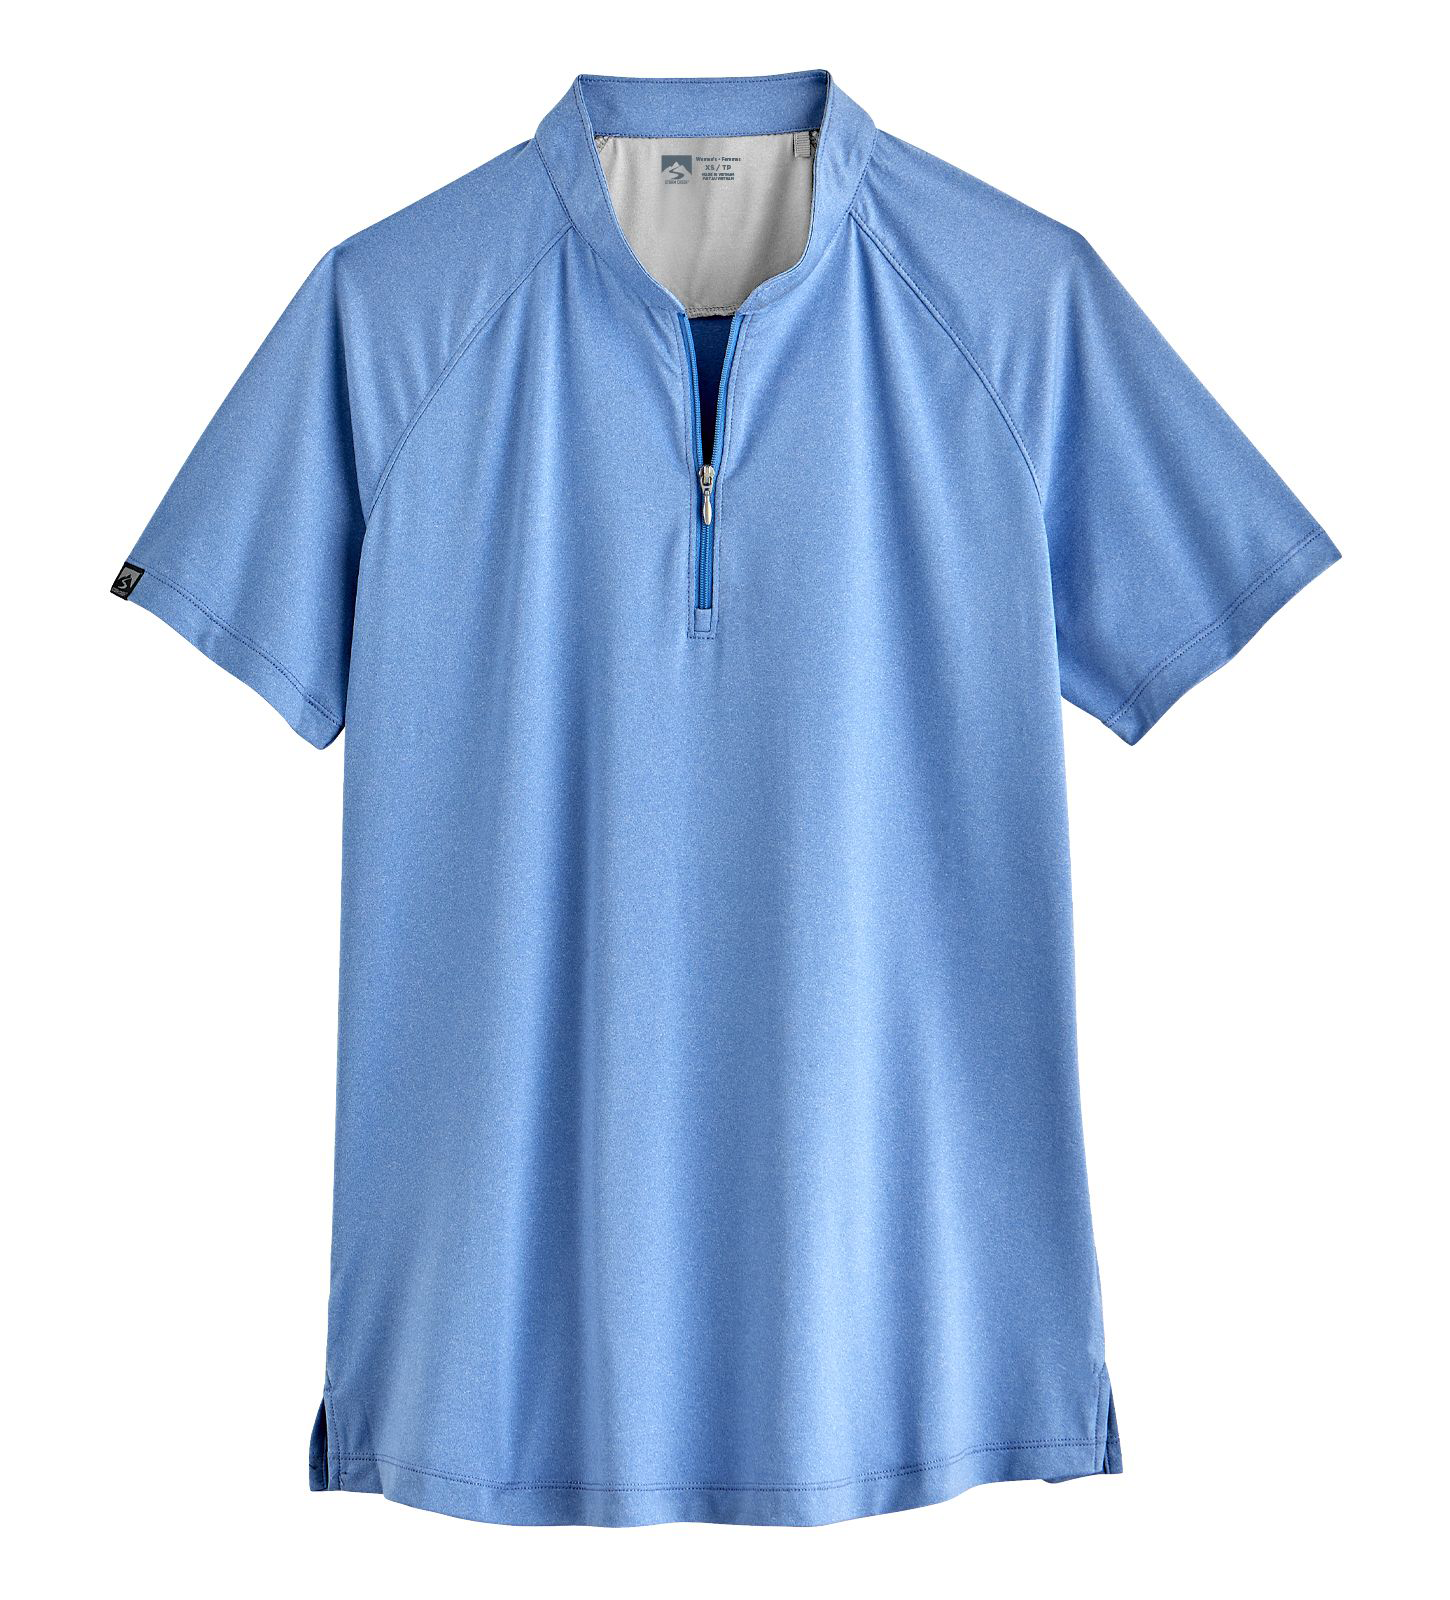 Storm Creek Visionary Polo Short-Sleeve Shirt for Ladies - Peri Blue - XS